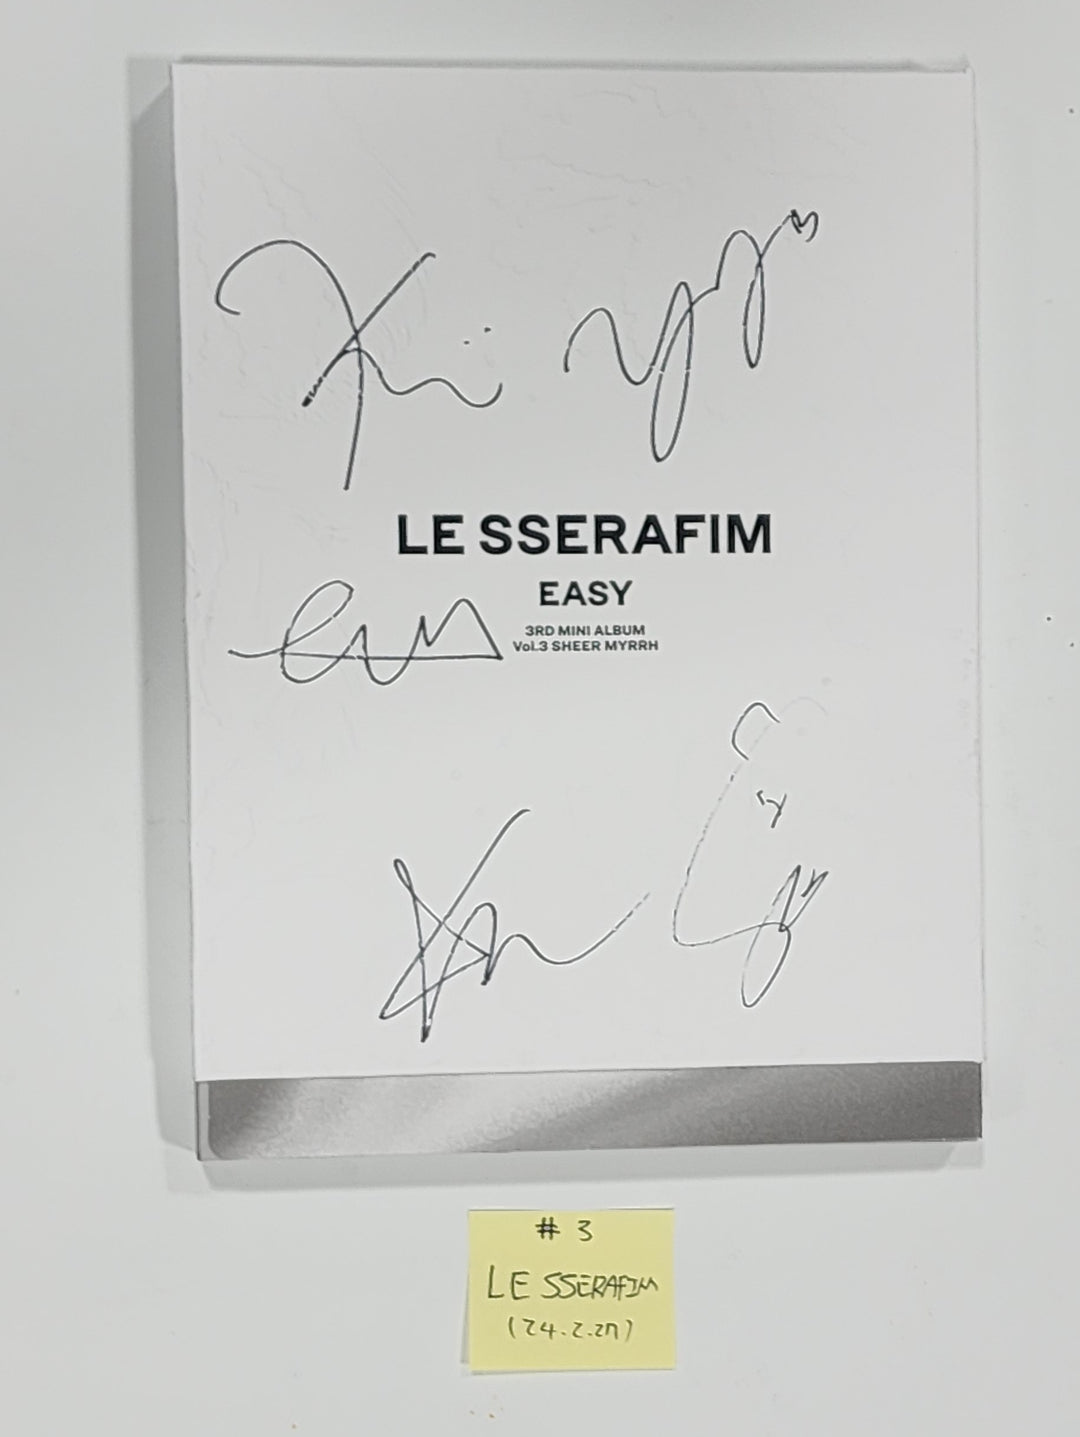 LE SSERAFIM "EASY", Moonbyul "Starlit of Muse" [Printed], TRI.BE "Diamond" - Hand Autographed(Signed) Album [24.2.27]